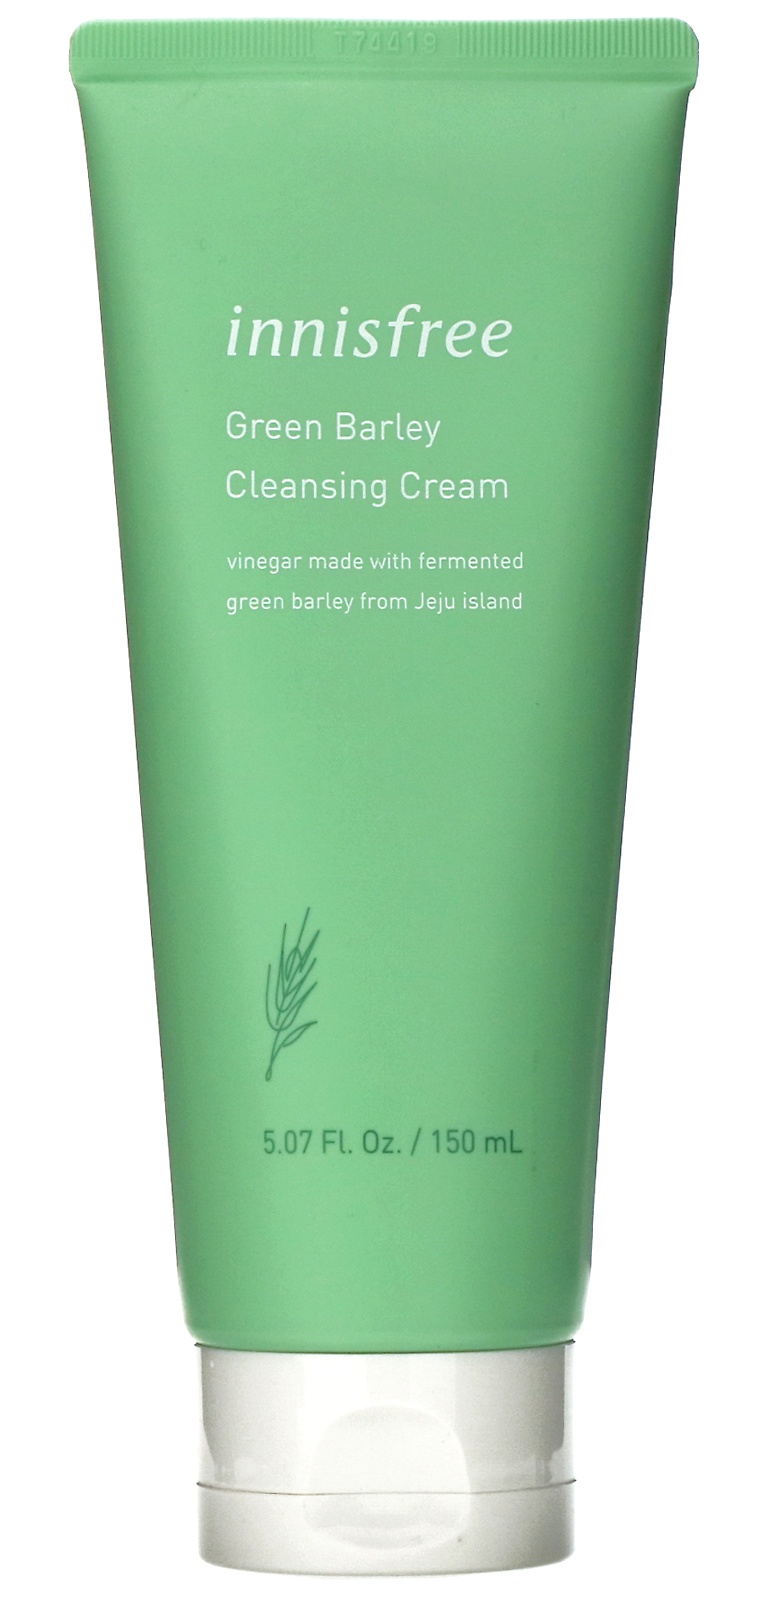 innisfree Green Barley Cleansing Cream